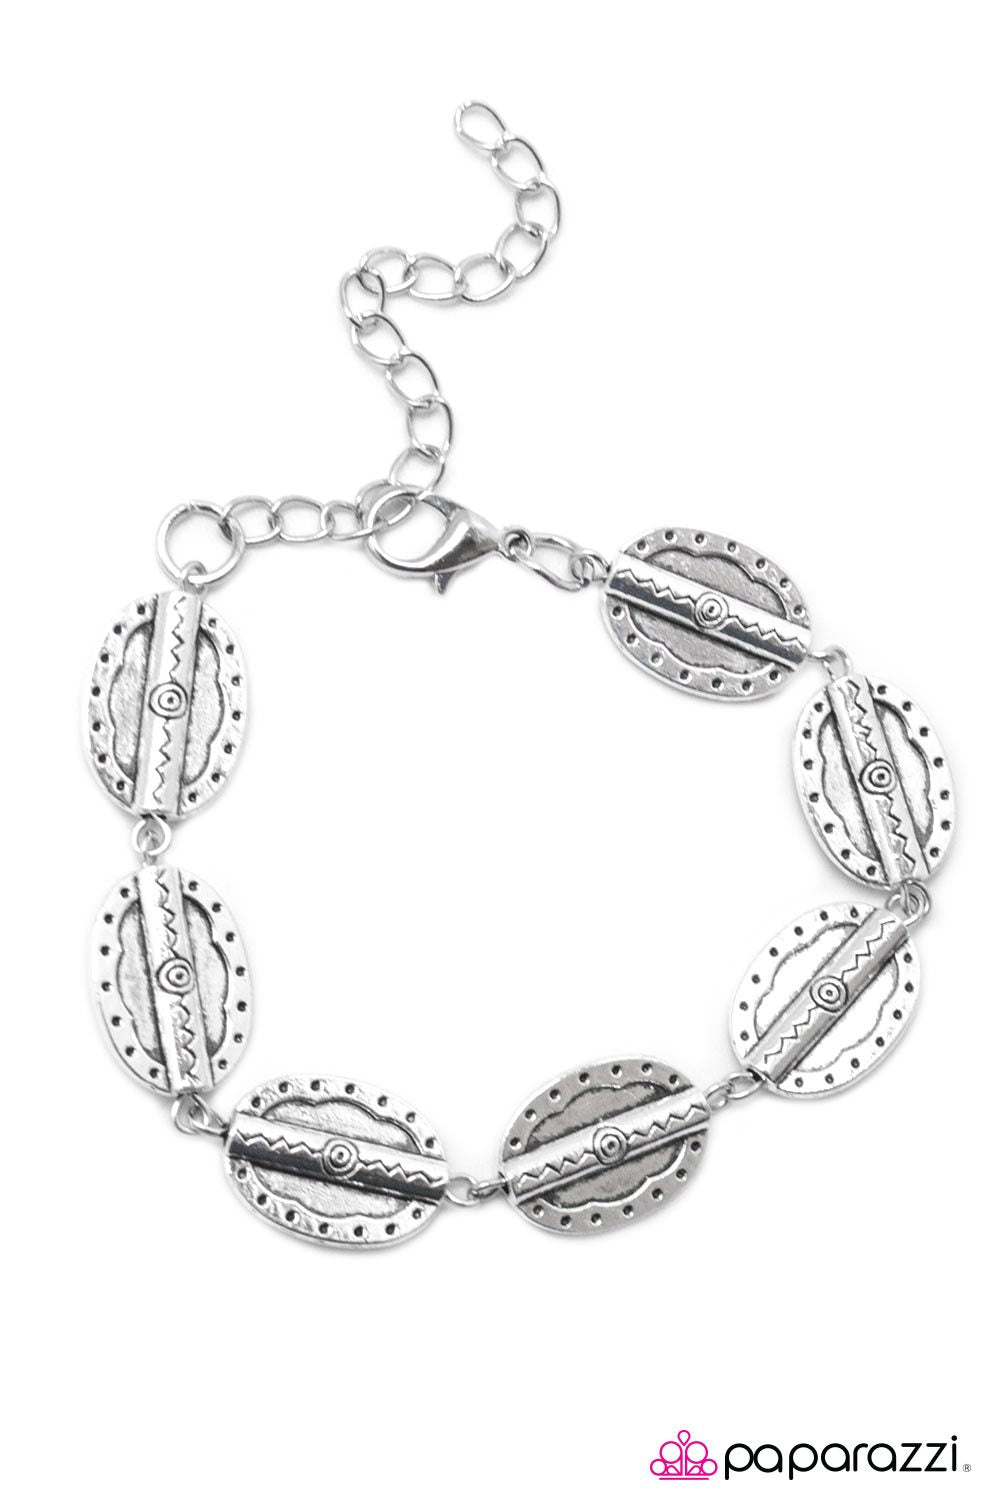 Incan Inspiration Silver Bracelet - Paparazzi Accessories-CarasShop.com - $5 Jewelry by Cara Jewels